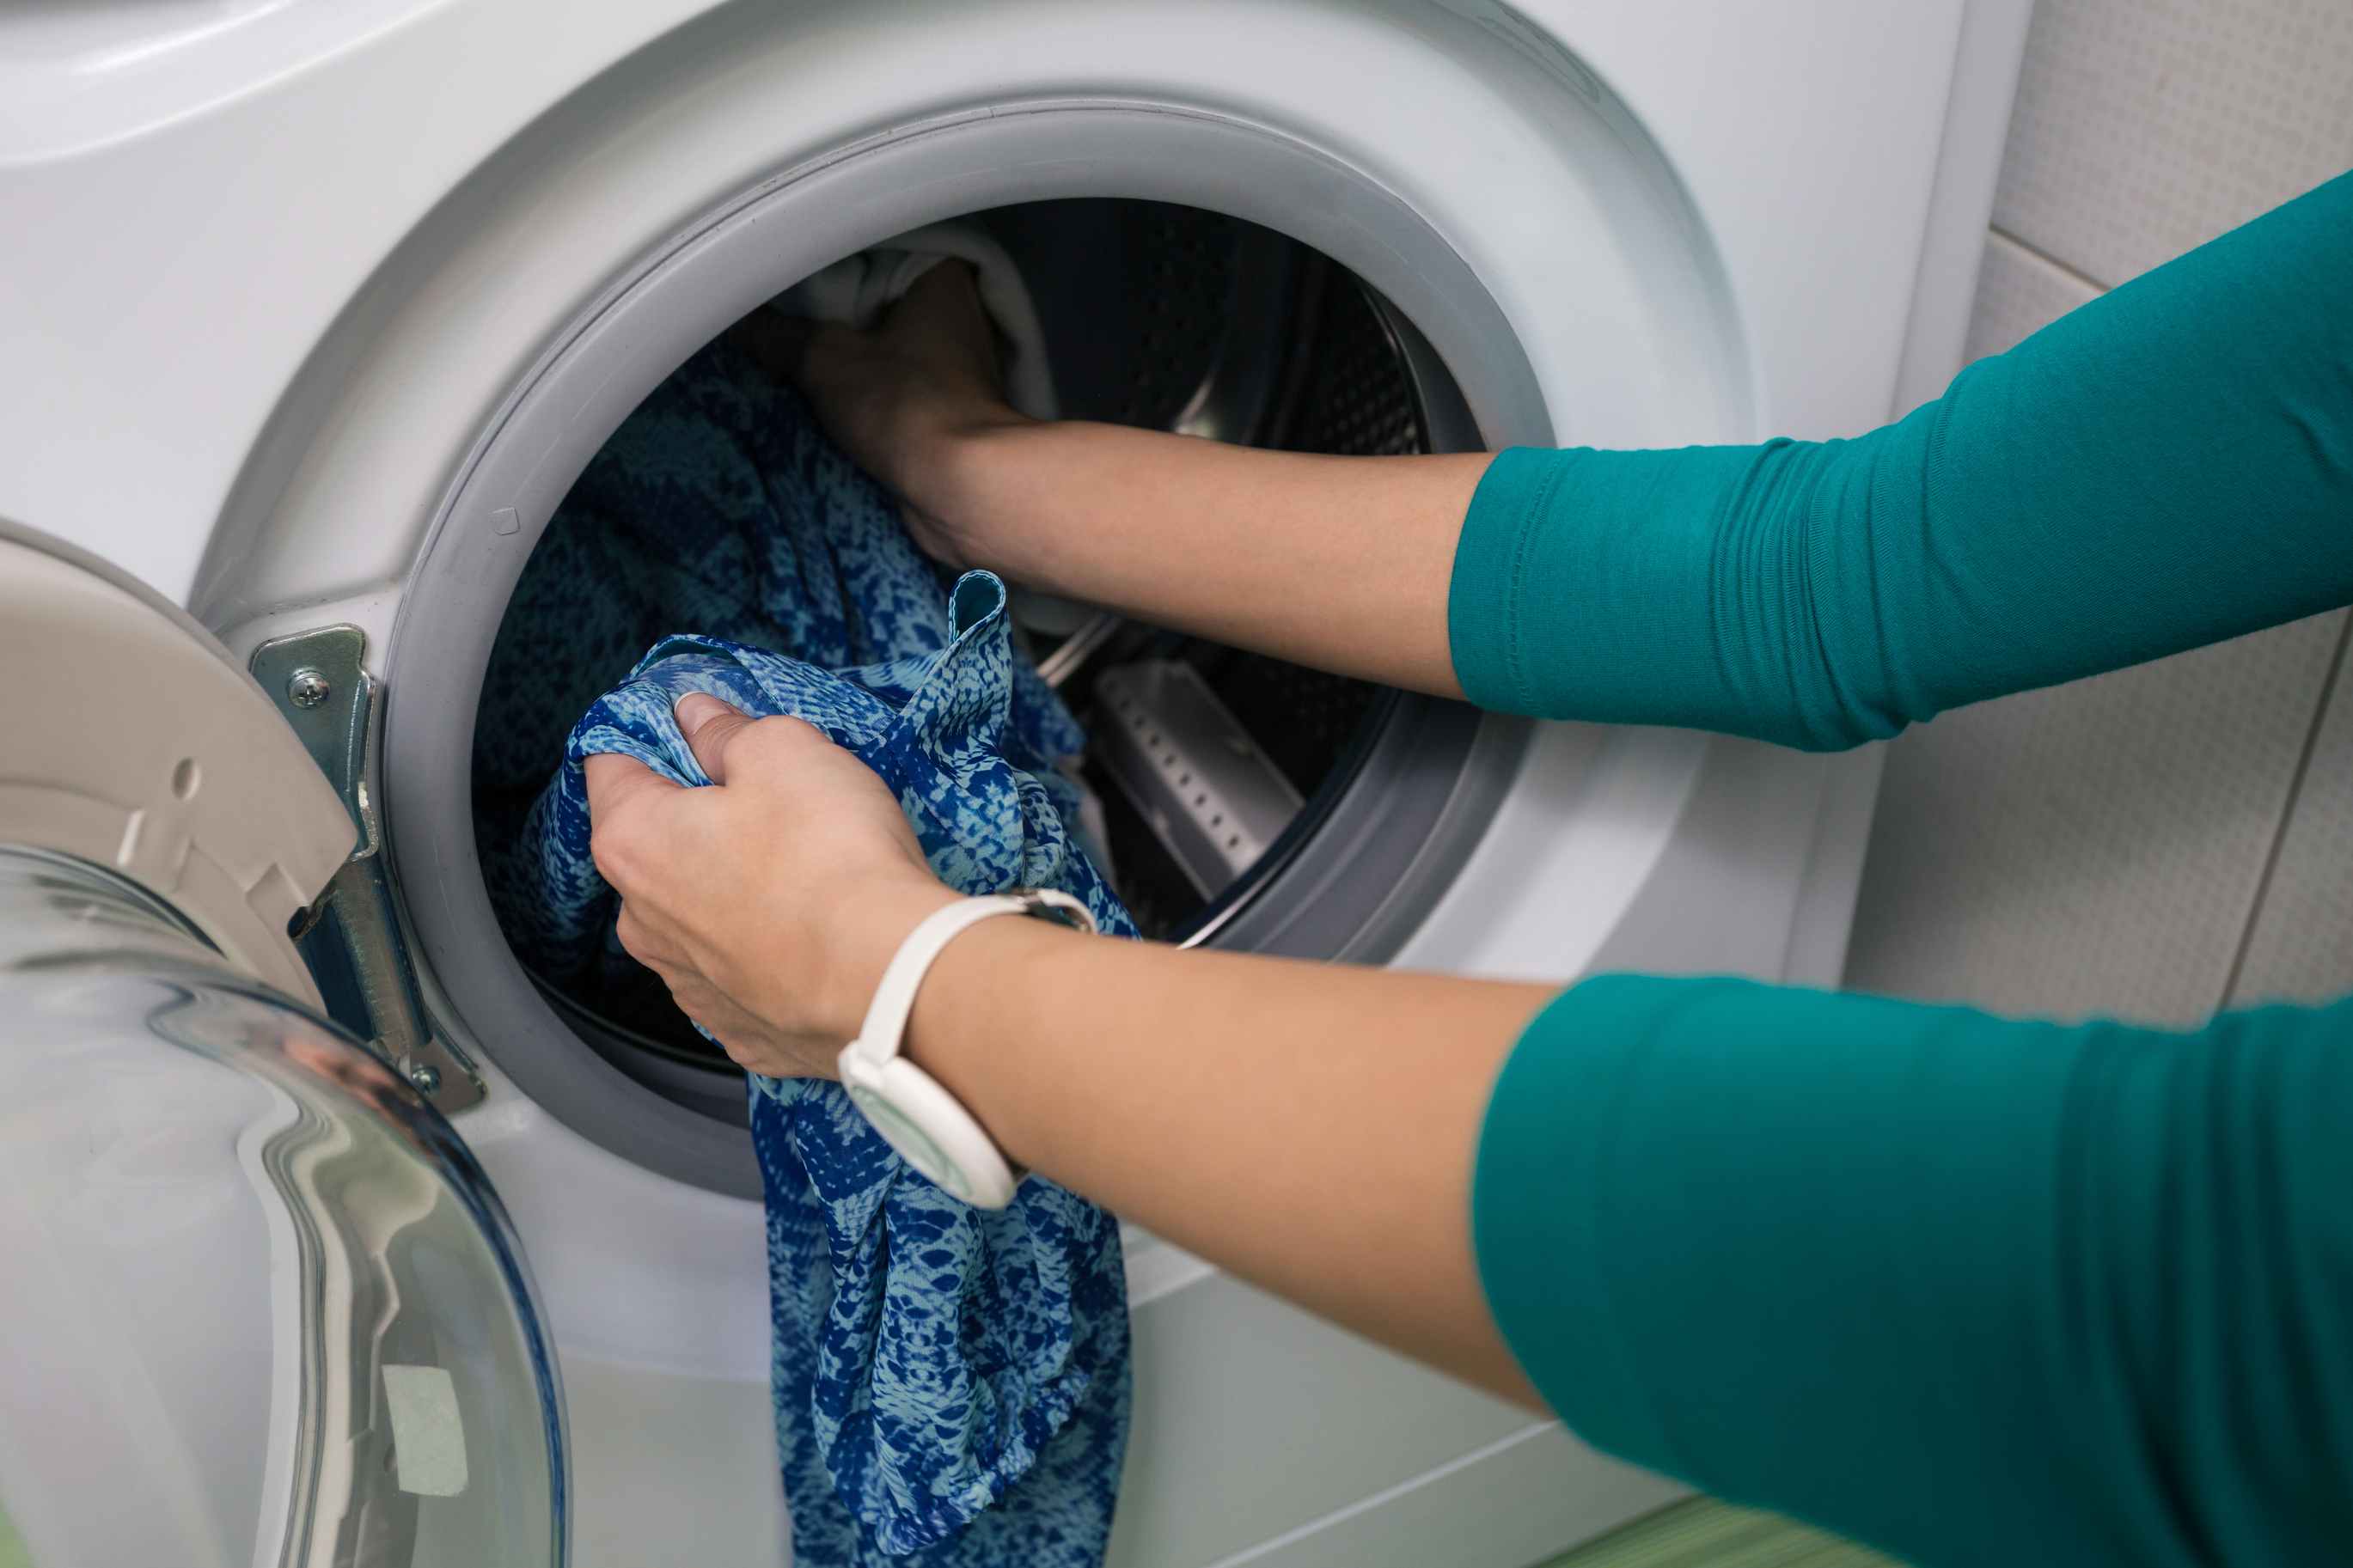 Putting clothes into washing machine